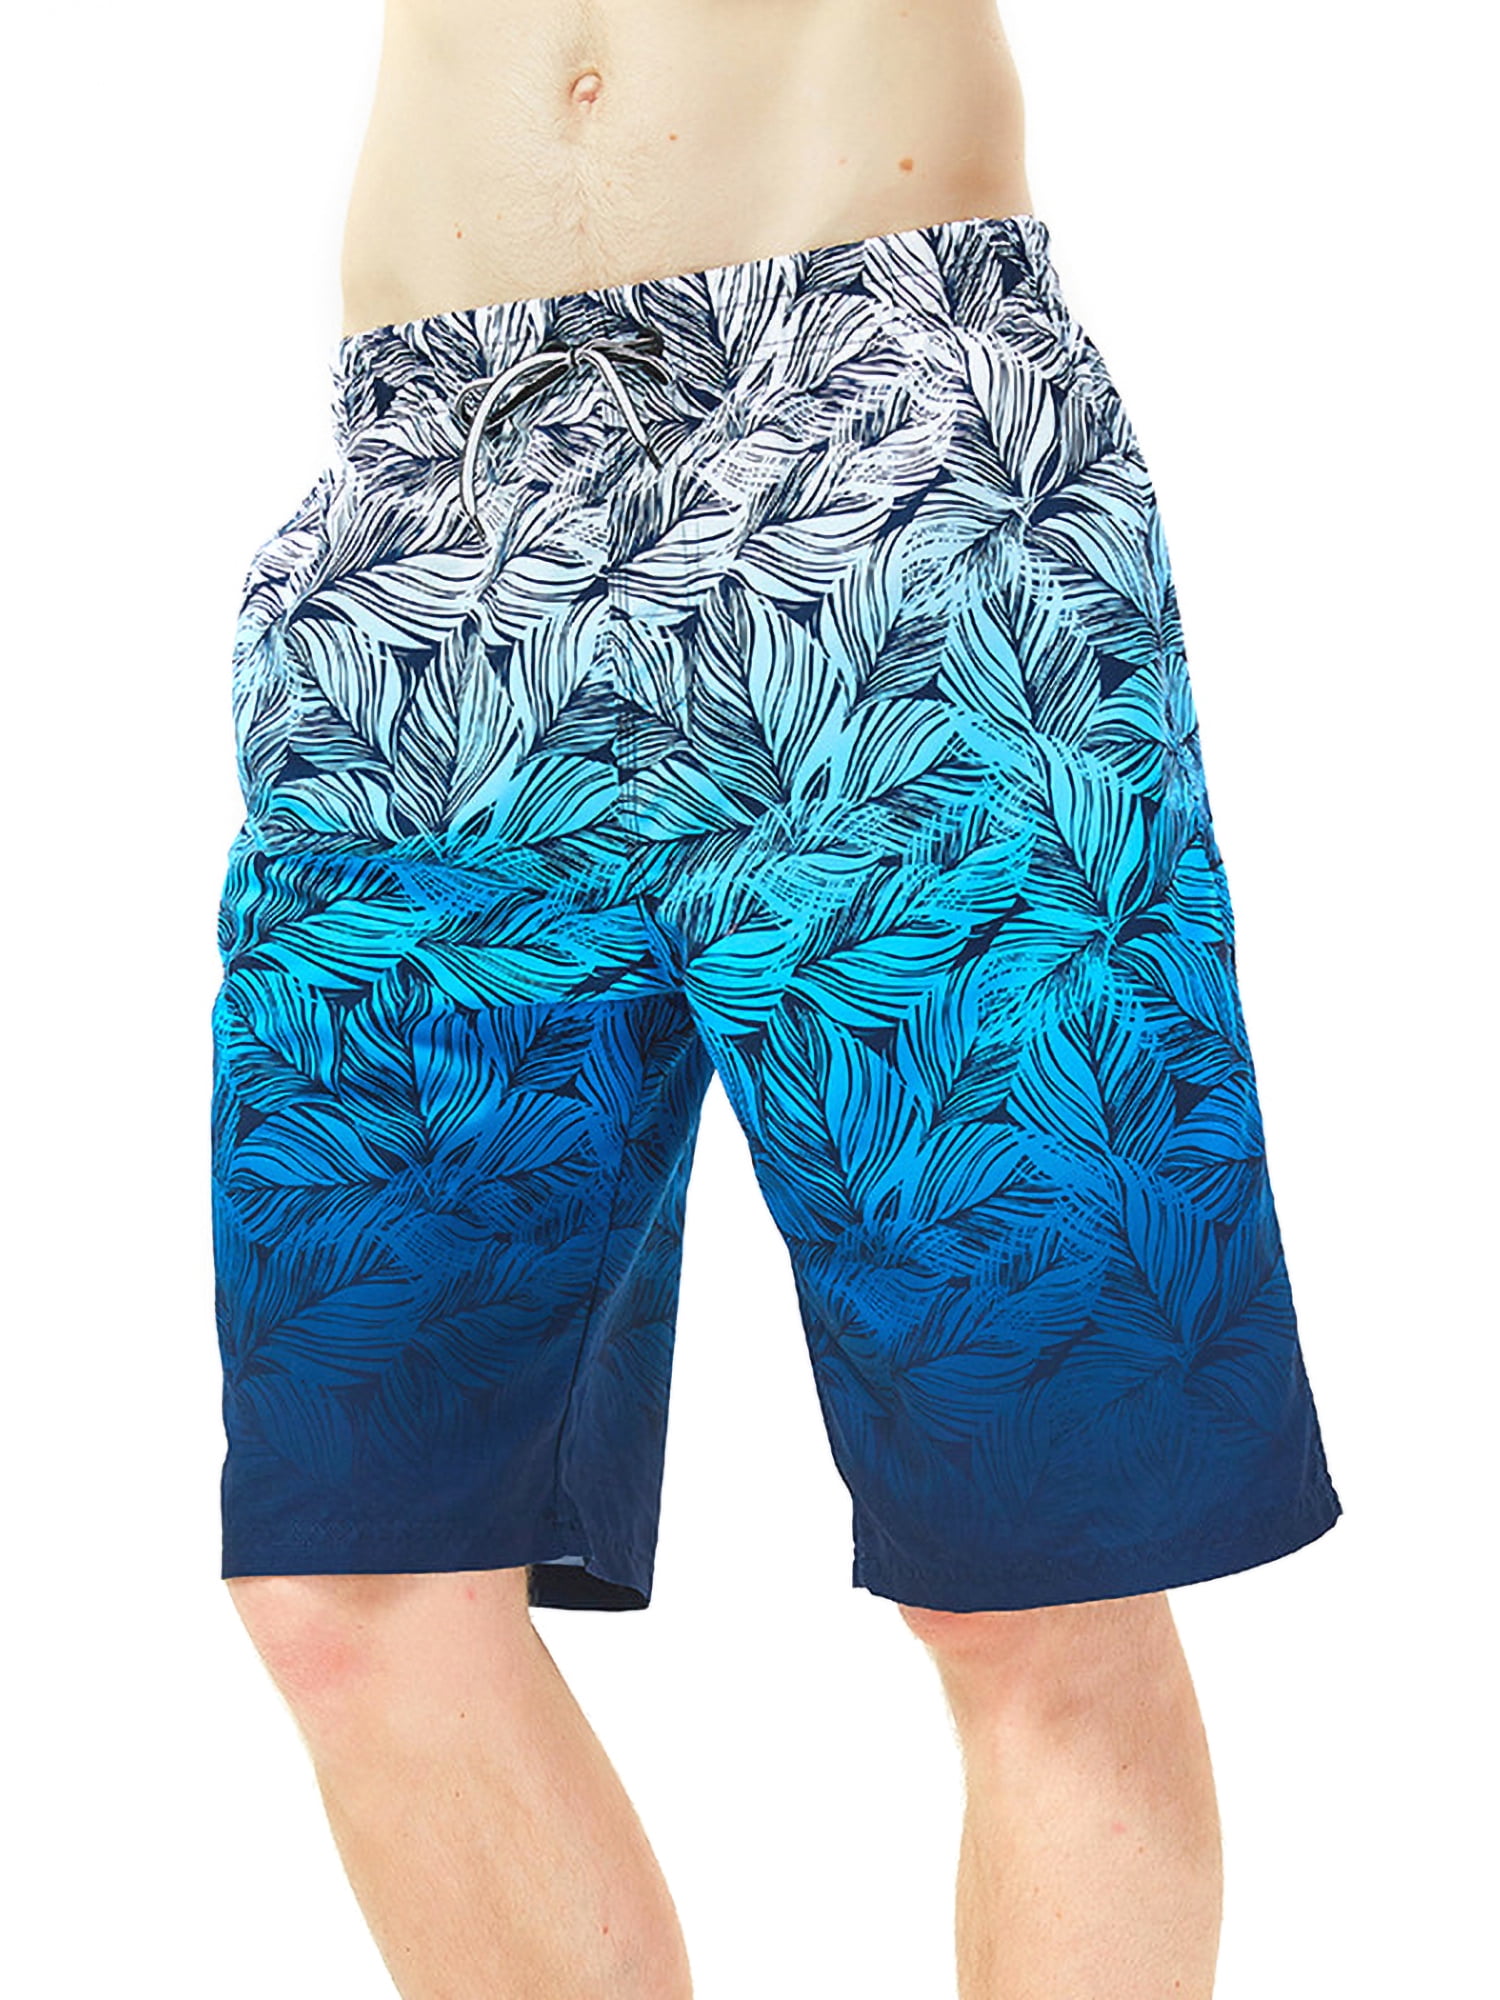 One Nice Mens Swim Trunks Beachwear Quick Dry Hawaiian Printed Swimsuits with Lining 